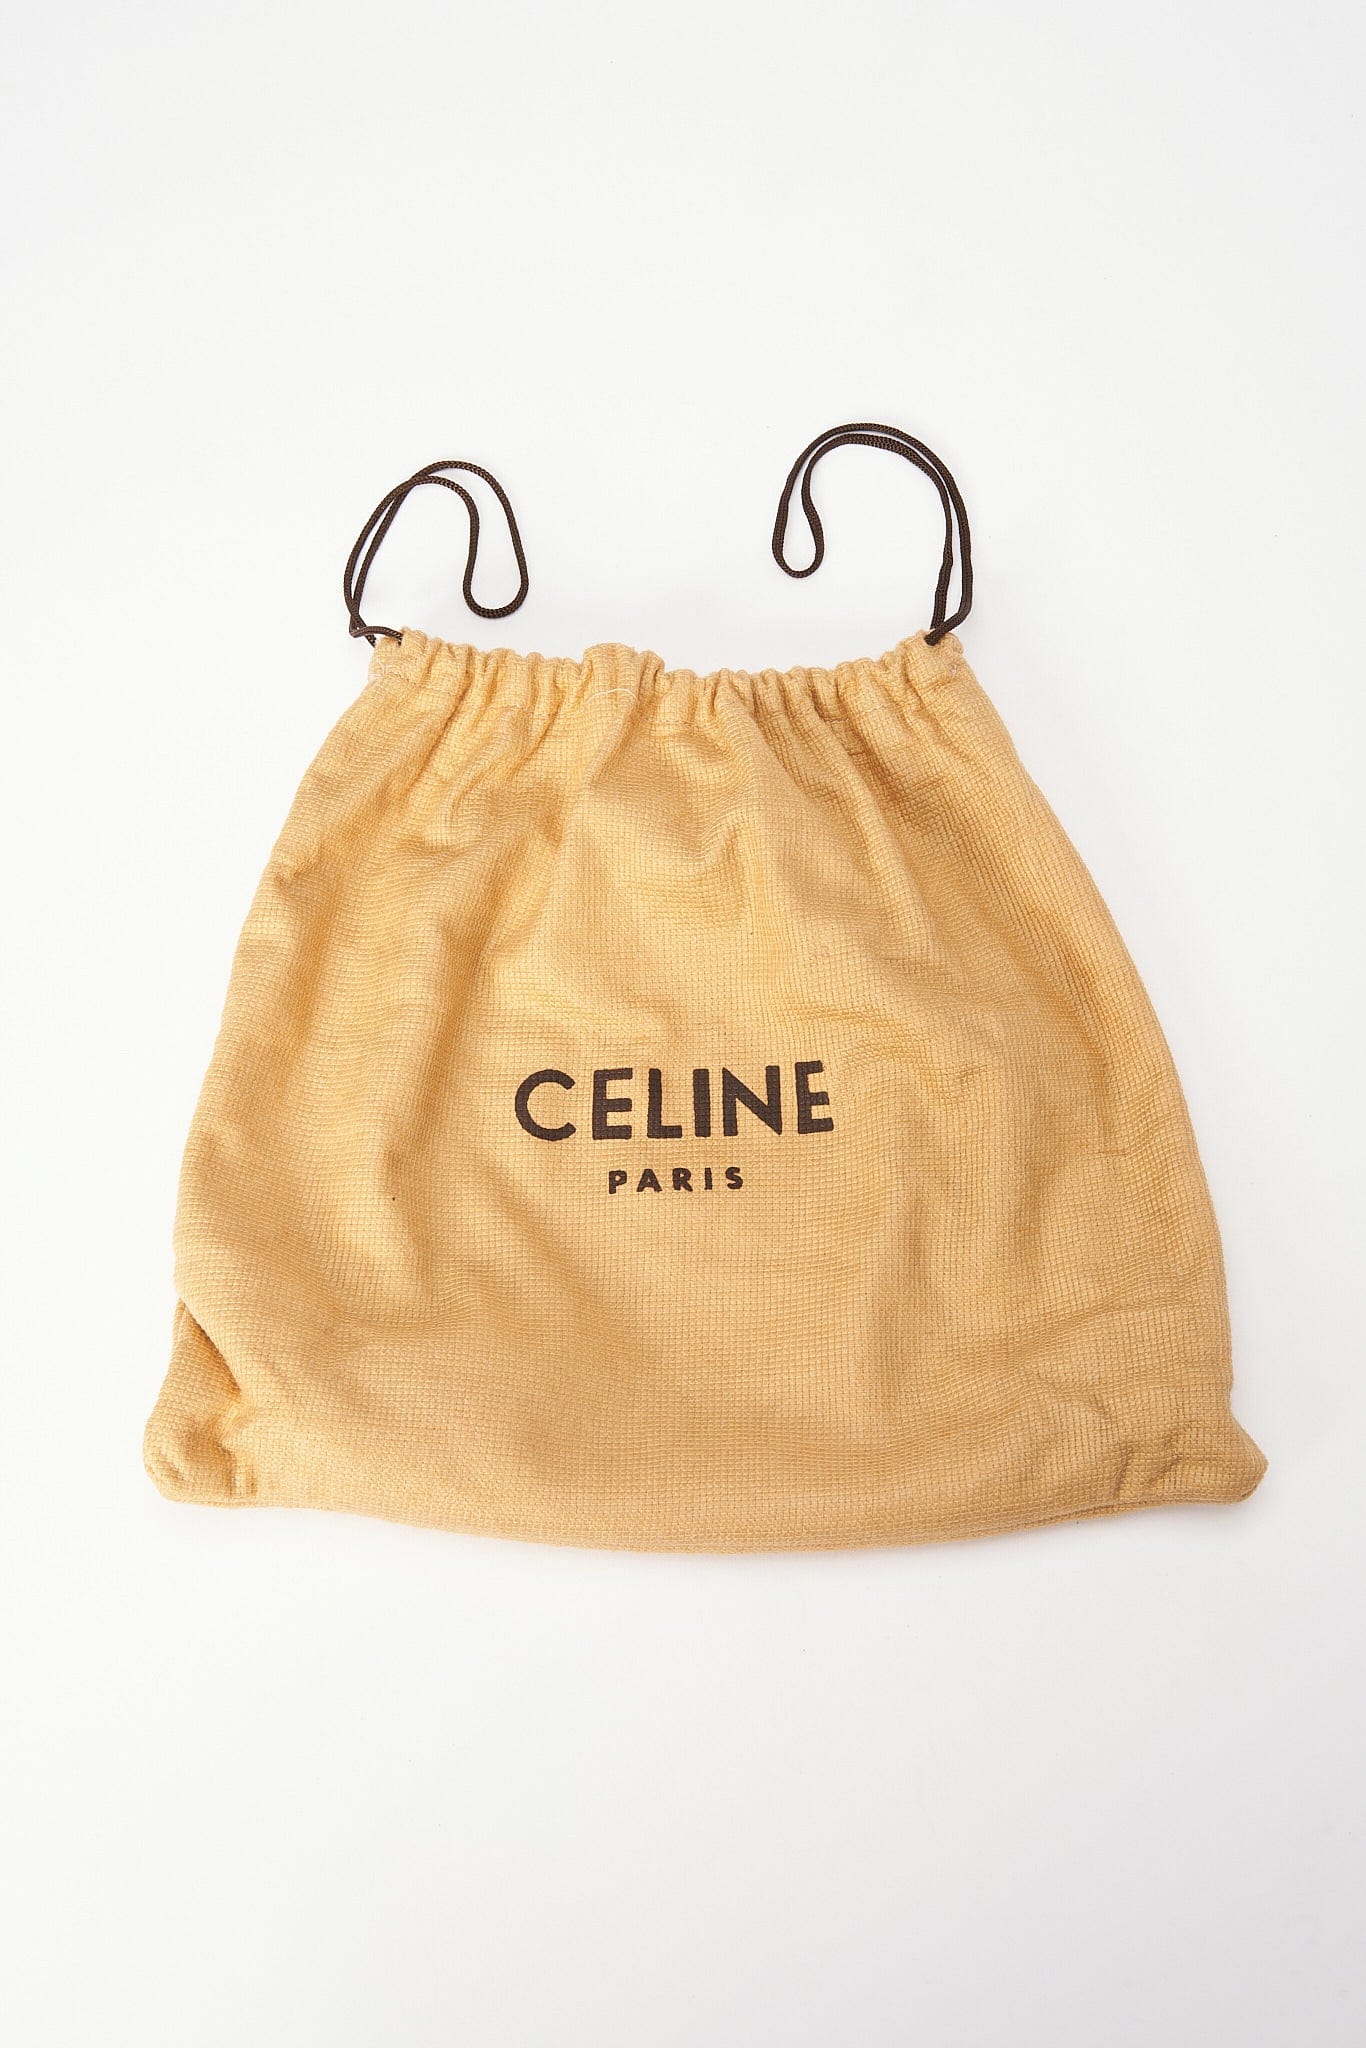 Vintage Celine Crossbody Bag